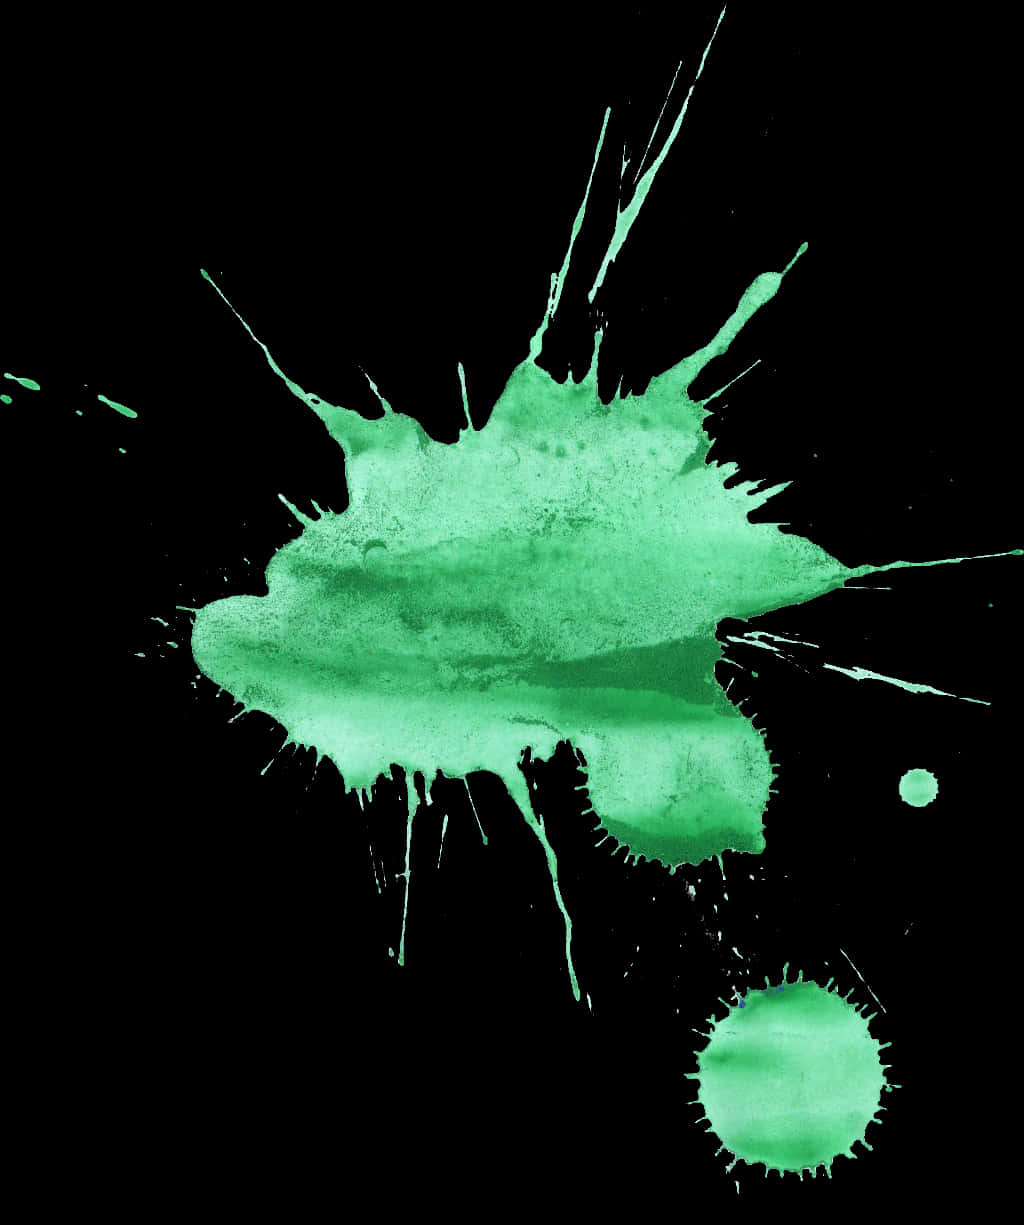 A Green Paint Splatter On A Black Background